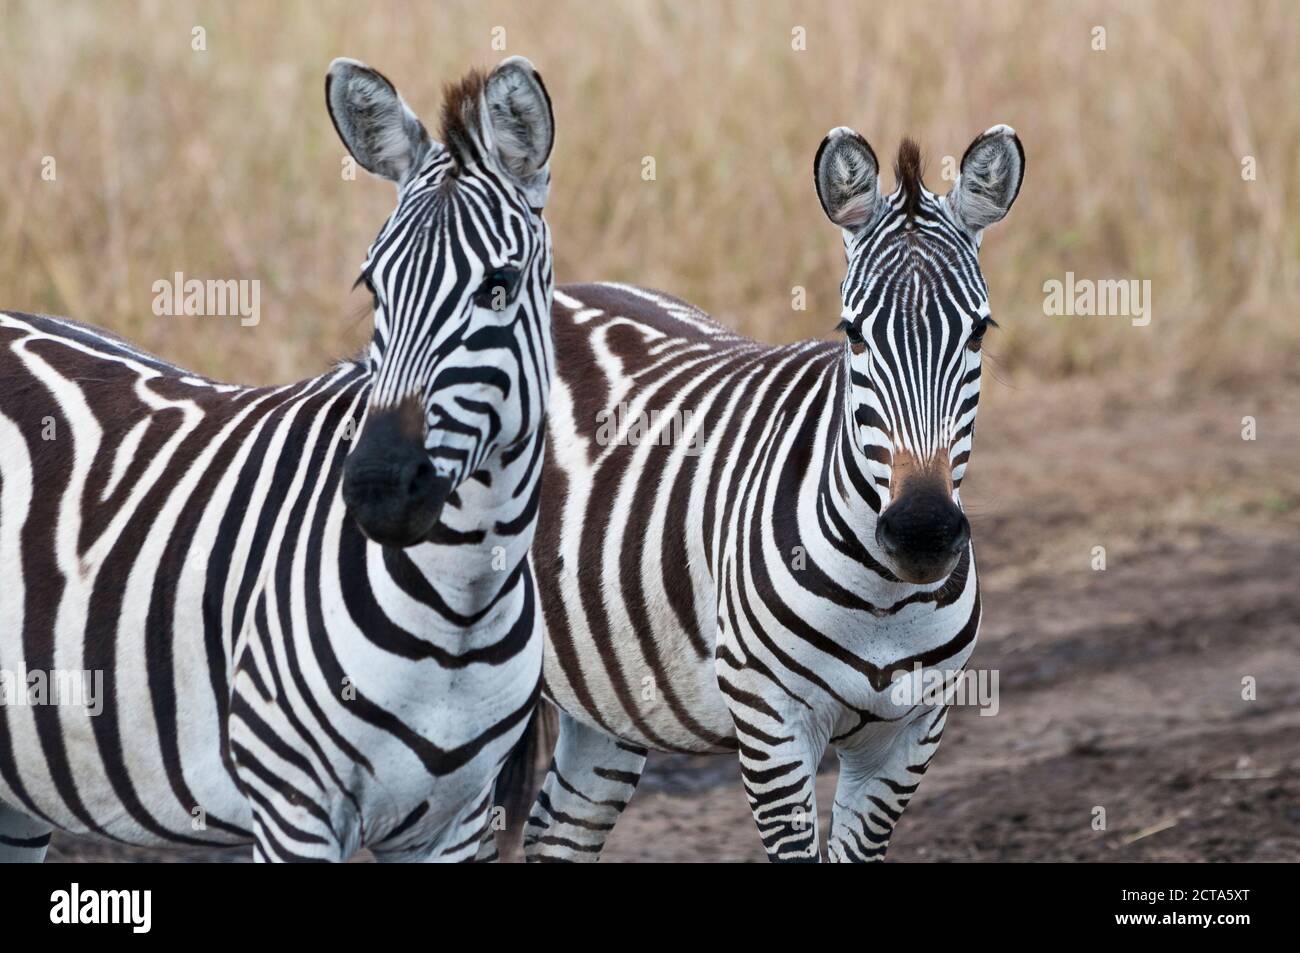 Africa, Kenya, Maasai Mara National Reserve, Two Plains zebras (Equus quagga), portraits Stock Photo